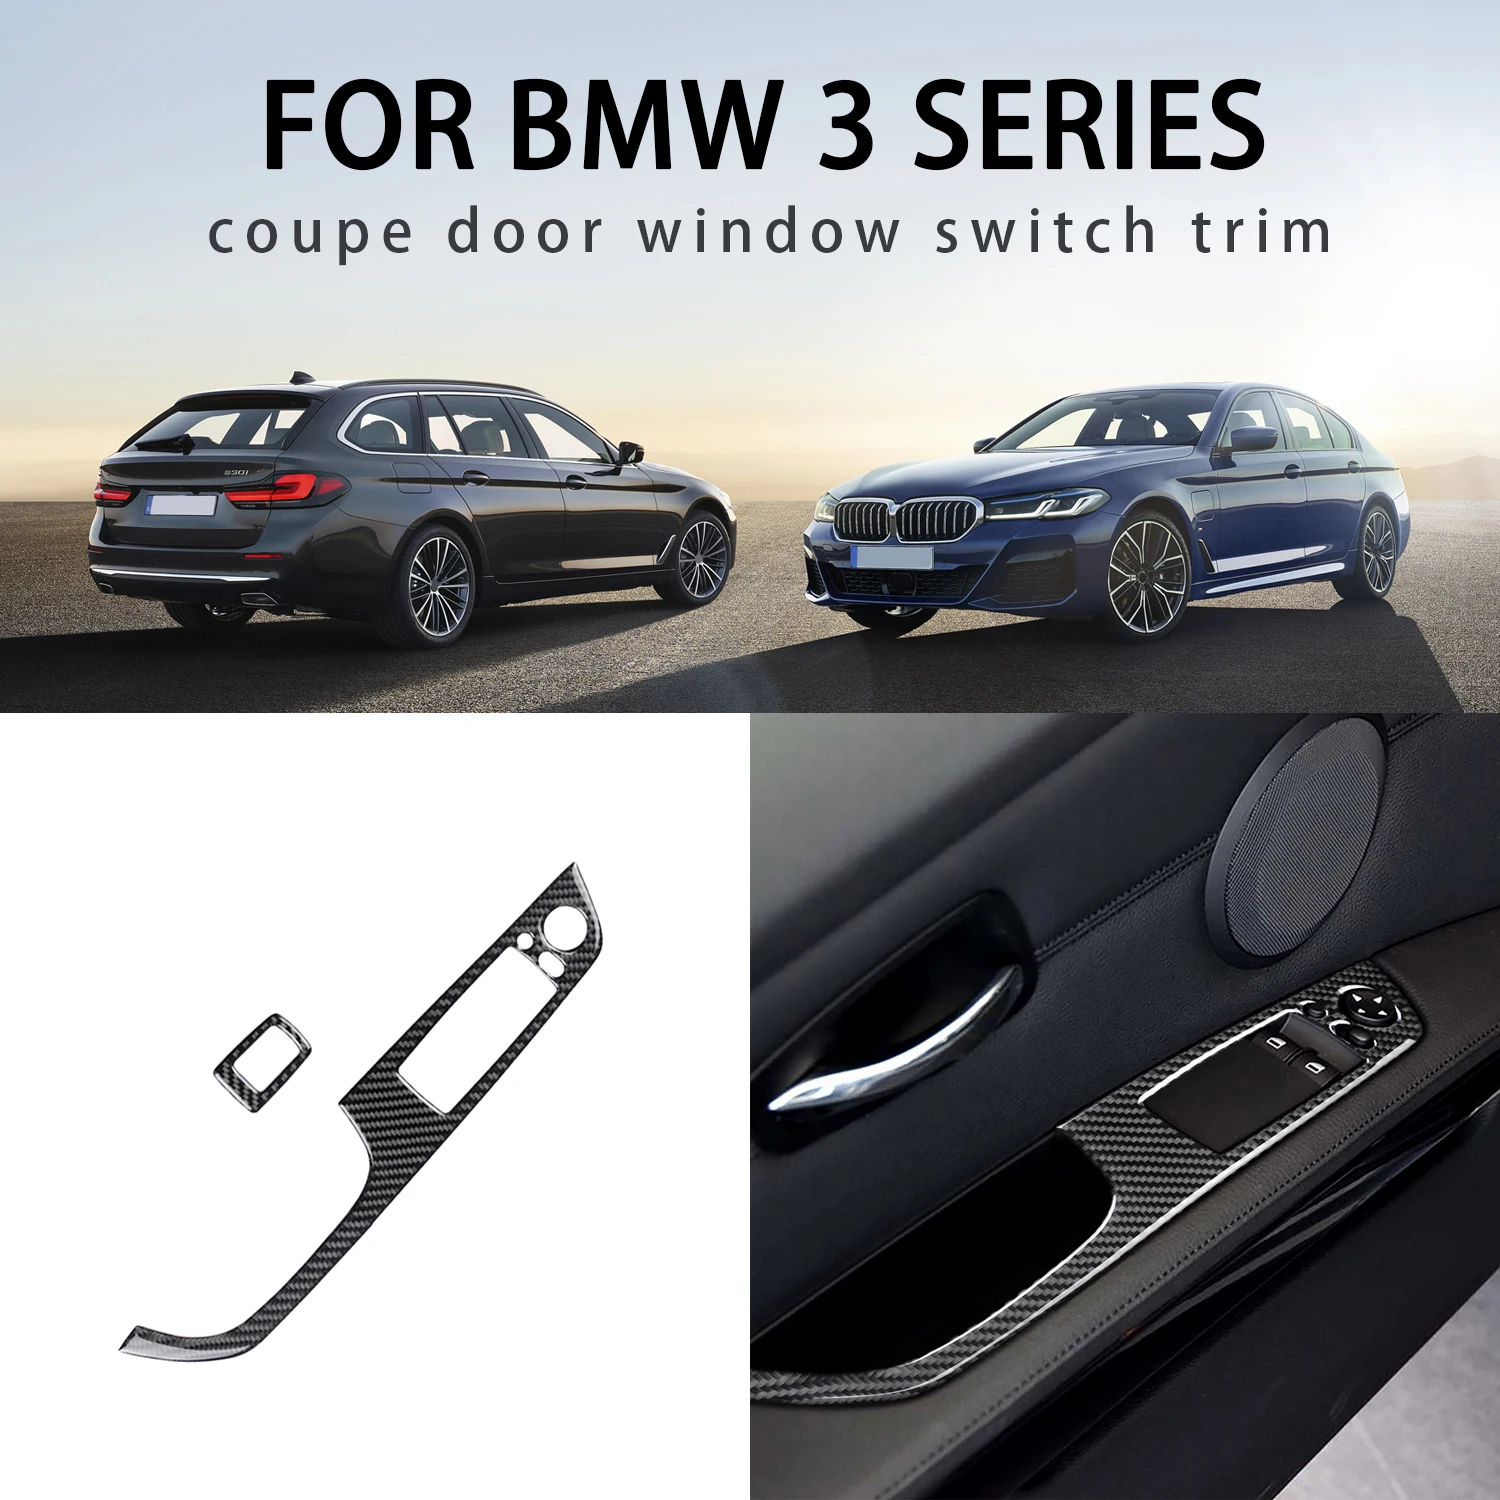 

2Pcs Door Casement Lift Switch Cover Trim For BMW 3 Series E92 Coupe Real Carbon Fiber Door Window Switch Trims